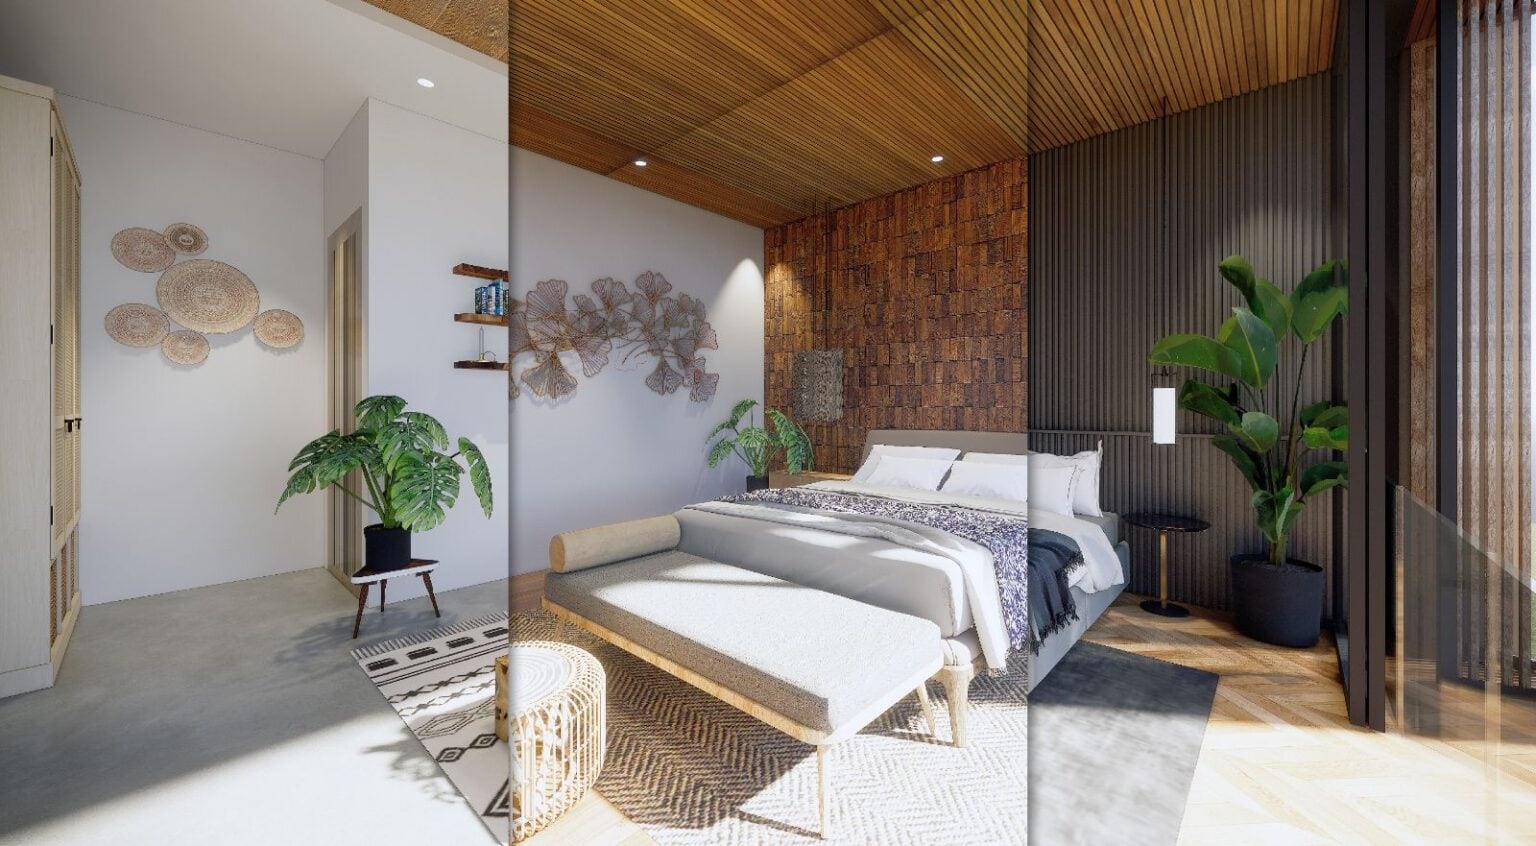 Custom Bedroom Designs - Bedroom Architects in Bali